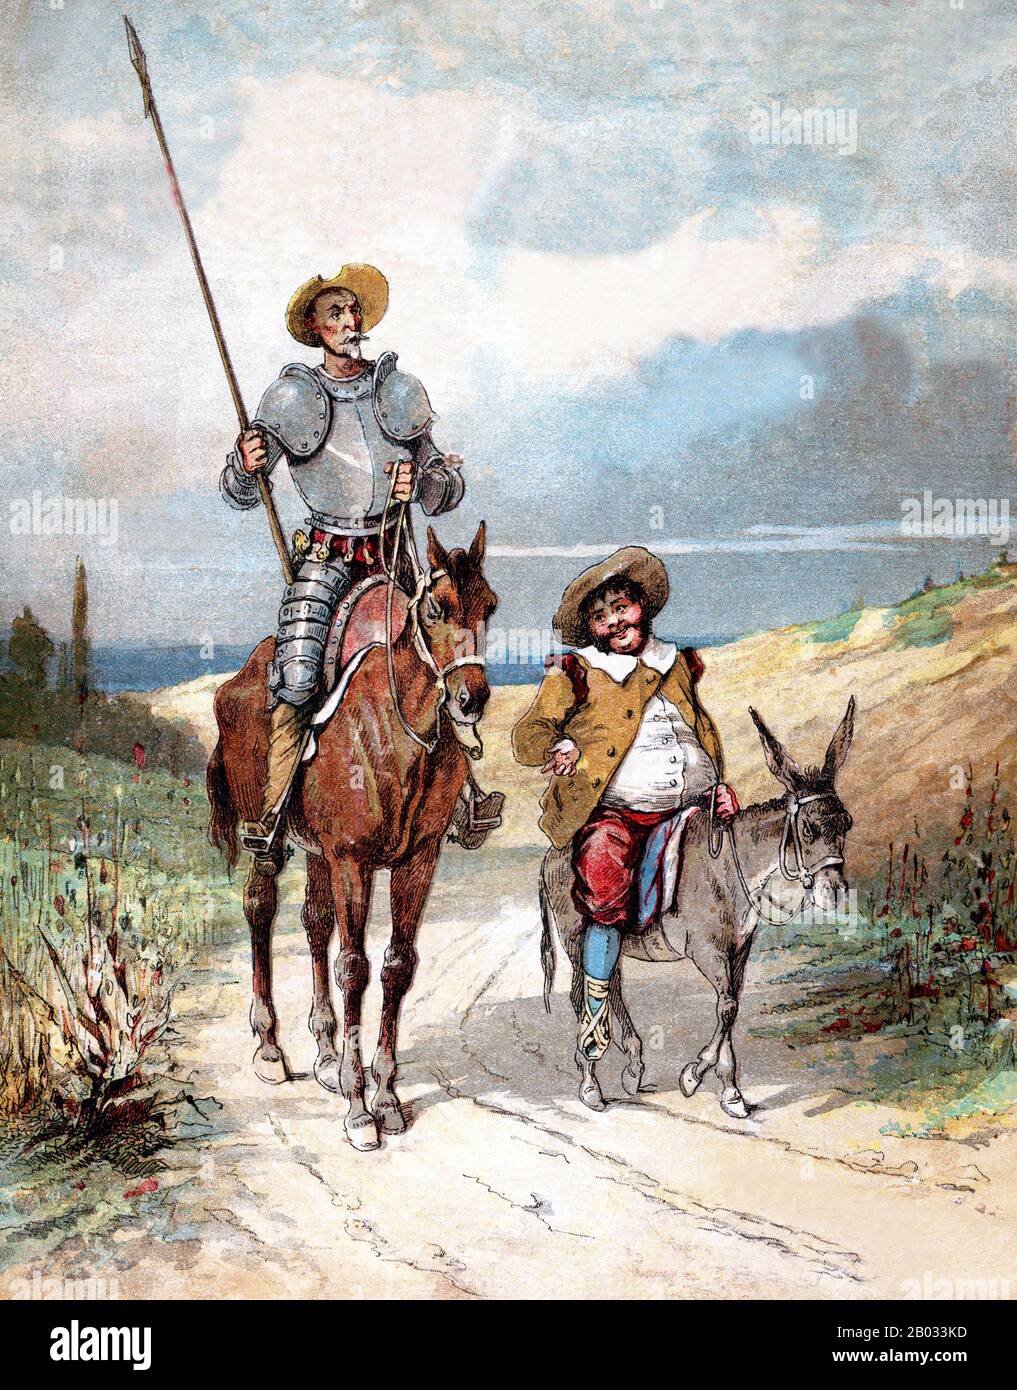 Don Quixote, fully titled The Ingenious Gentleman Don Quixote of La Mancha ( Spanish: El ingenioso hidalgo don Quijote de la Mancha), is a Spanish novel  by Miguel de Cervantes Saavedra. Published in